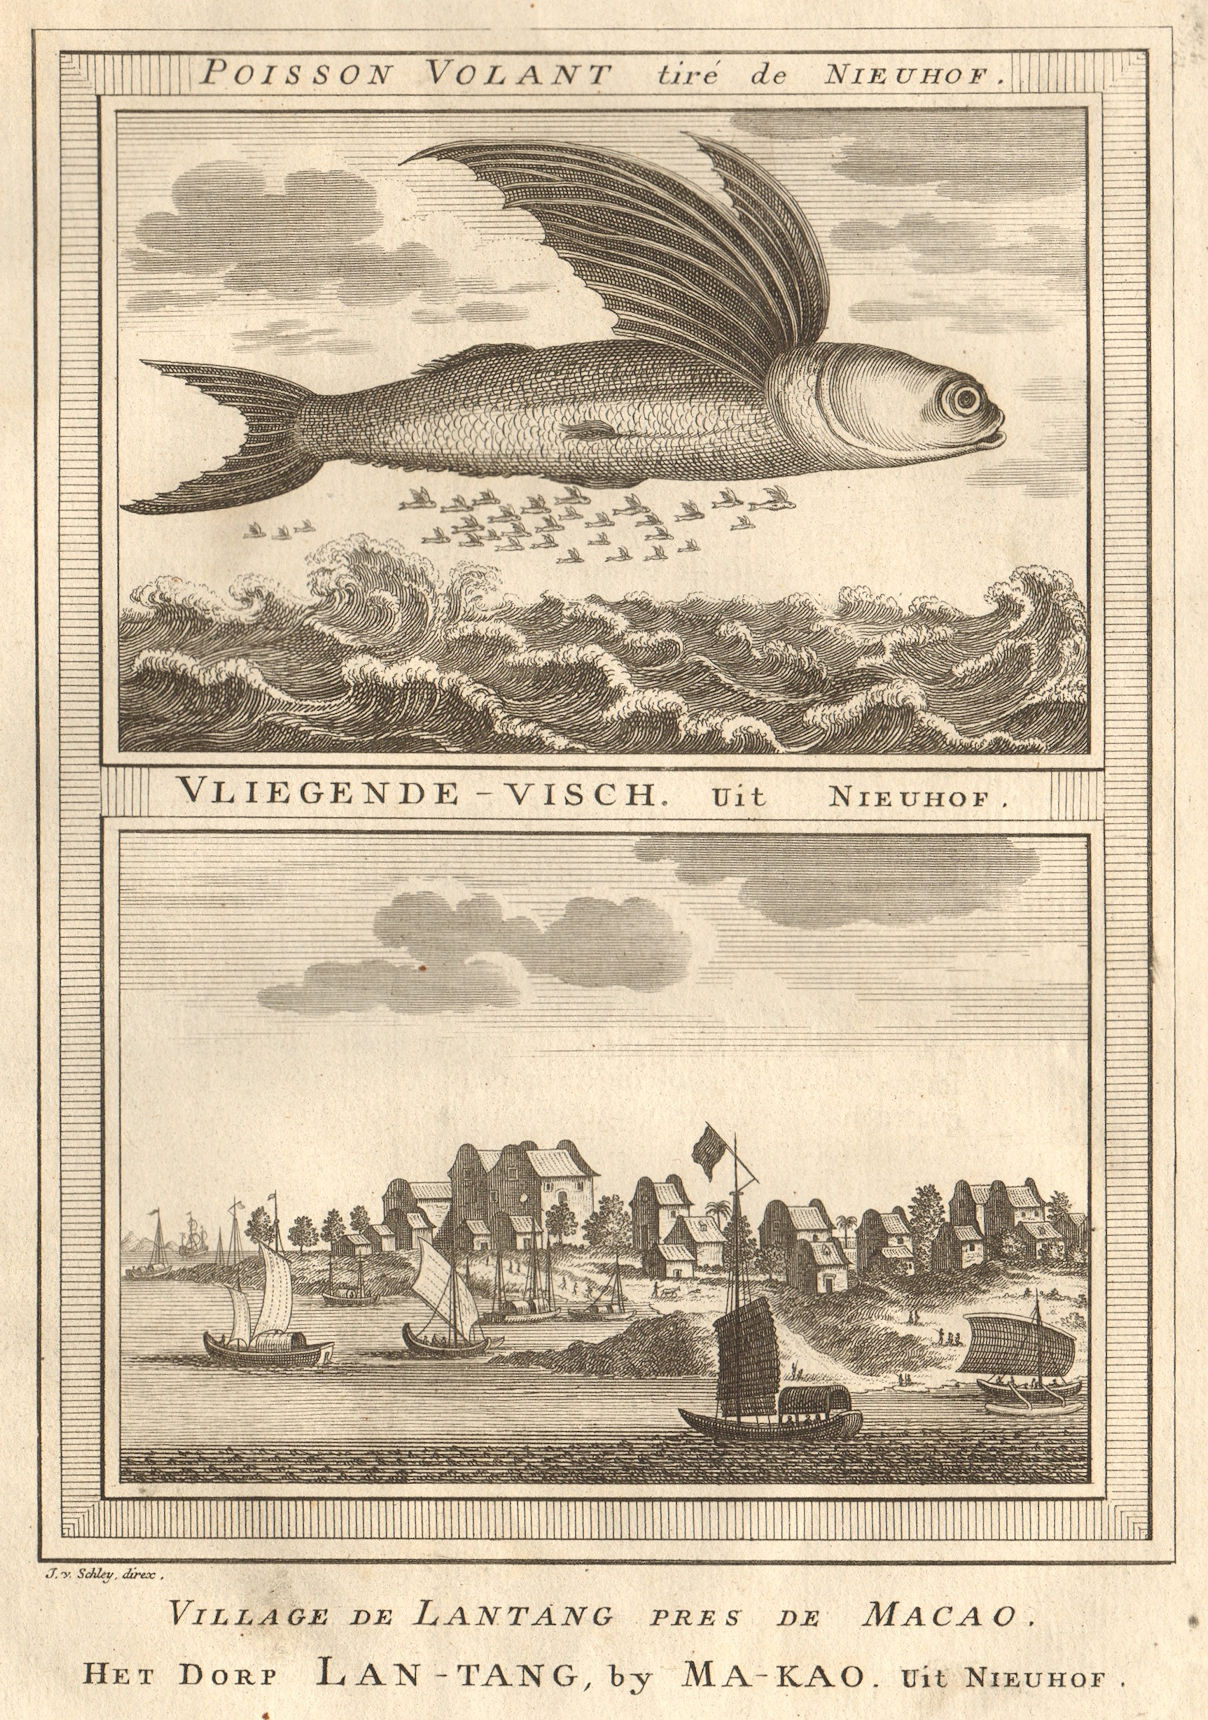 Poisson volant. Flying fish; Liantang village, Macau. China. SCHLEY 1749 print